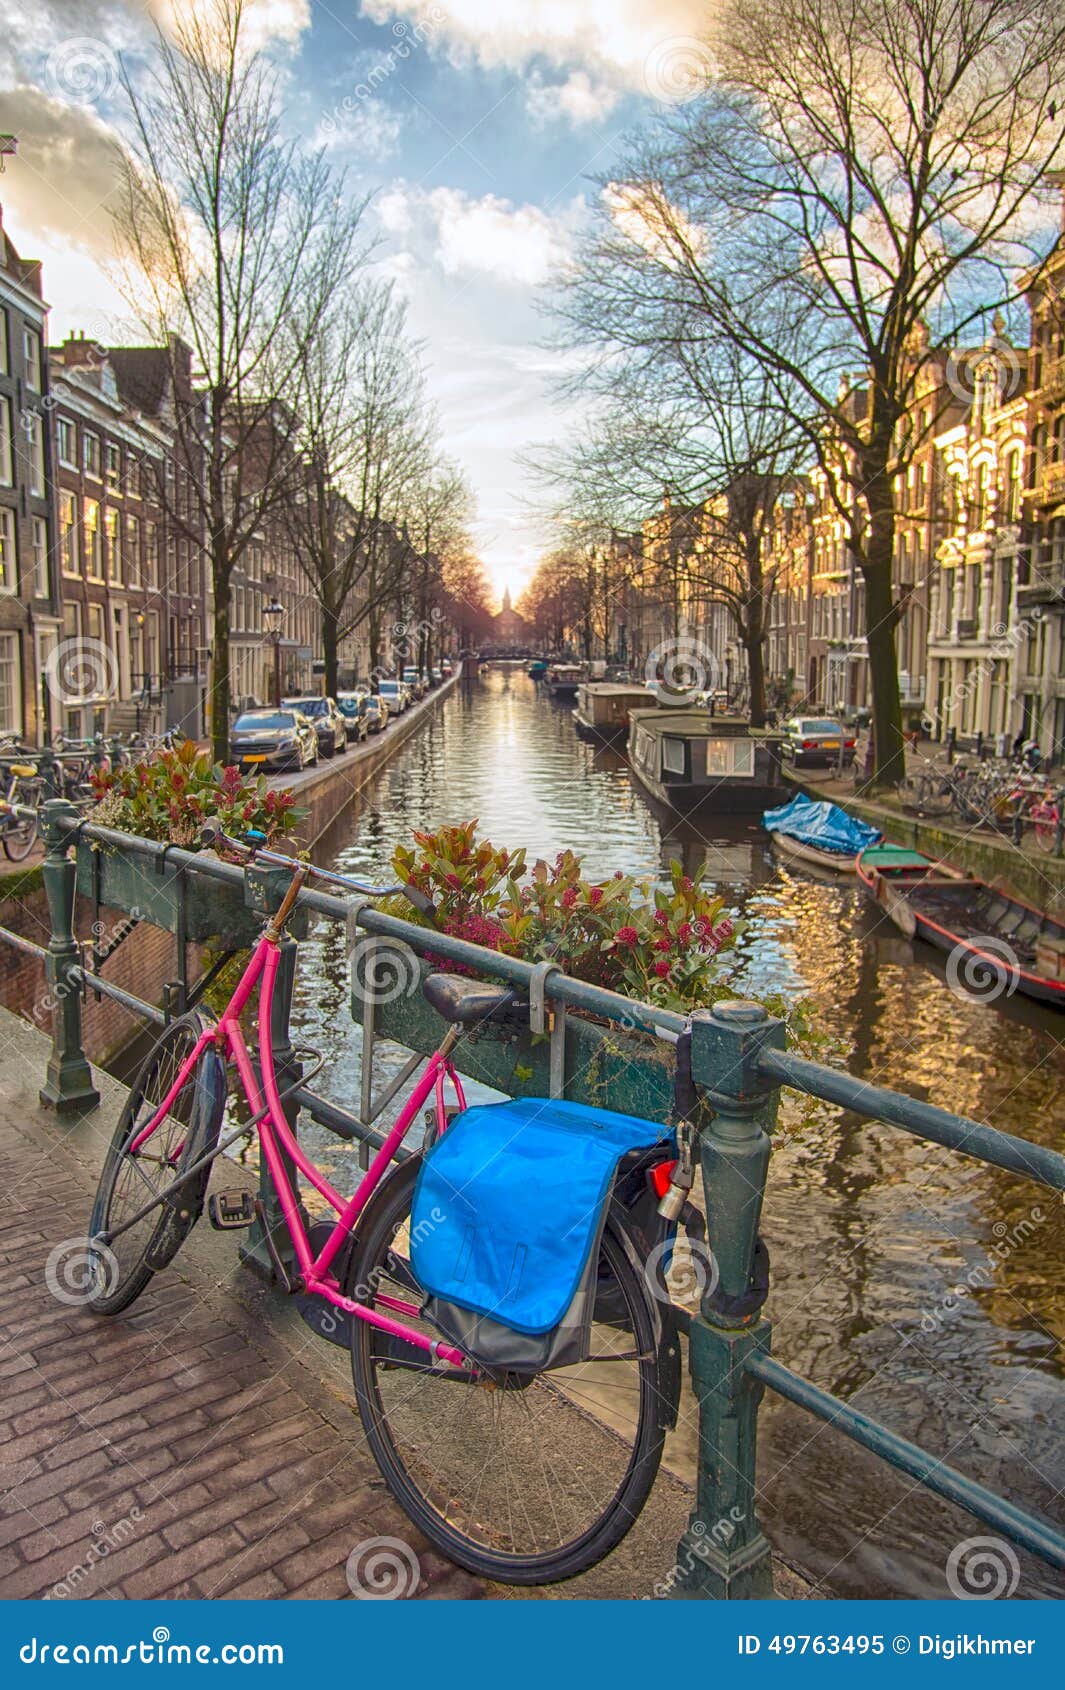 amsterdam iconic view